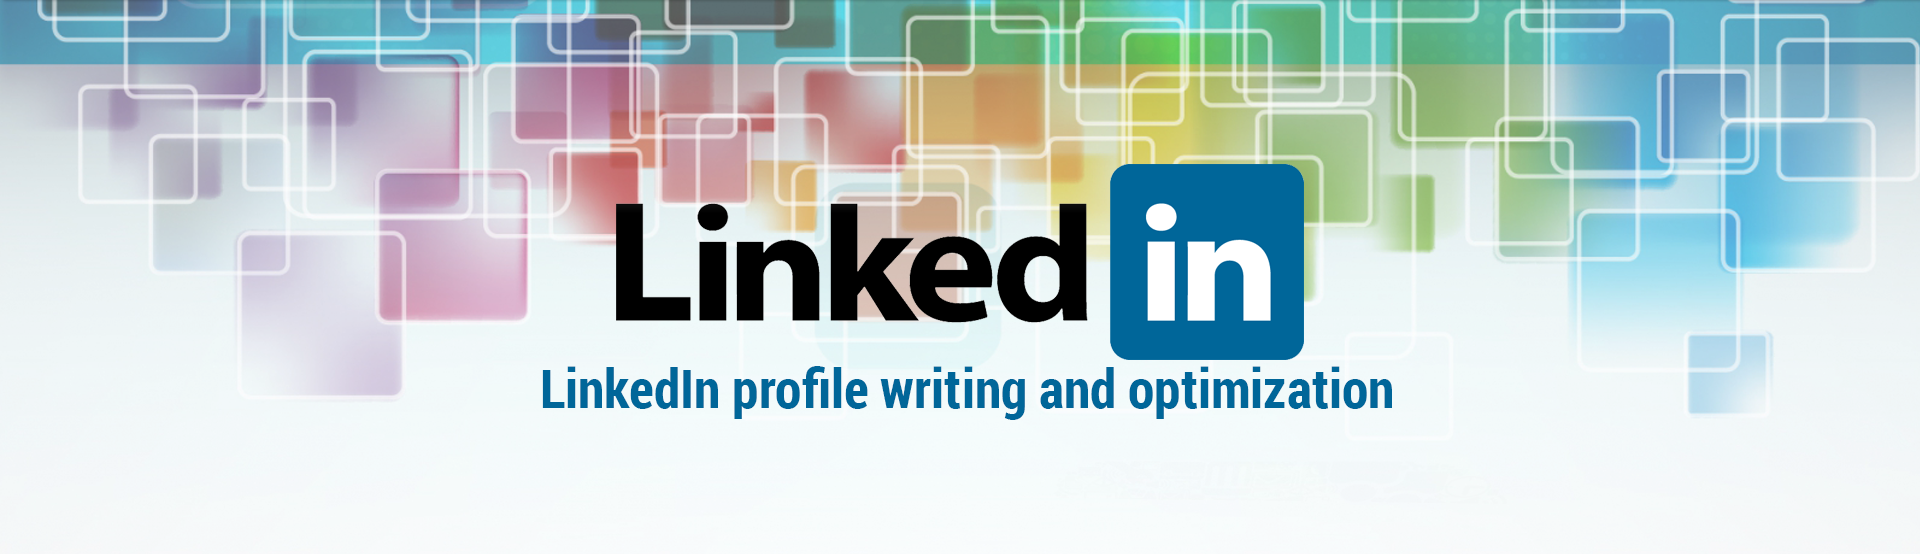 LinkedIn Profile Writing & Optimization Service - profile writer